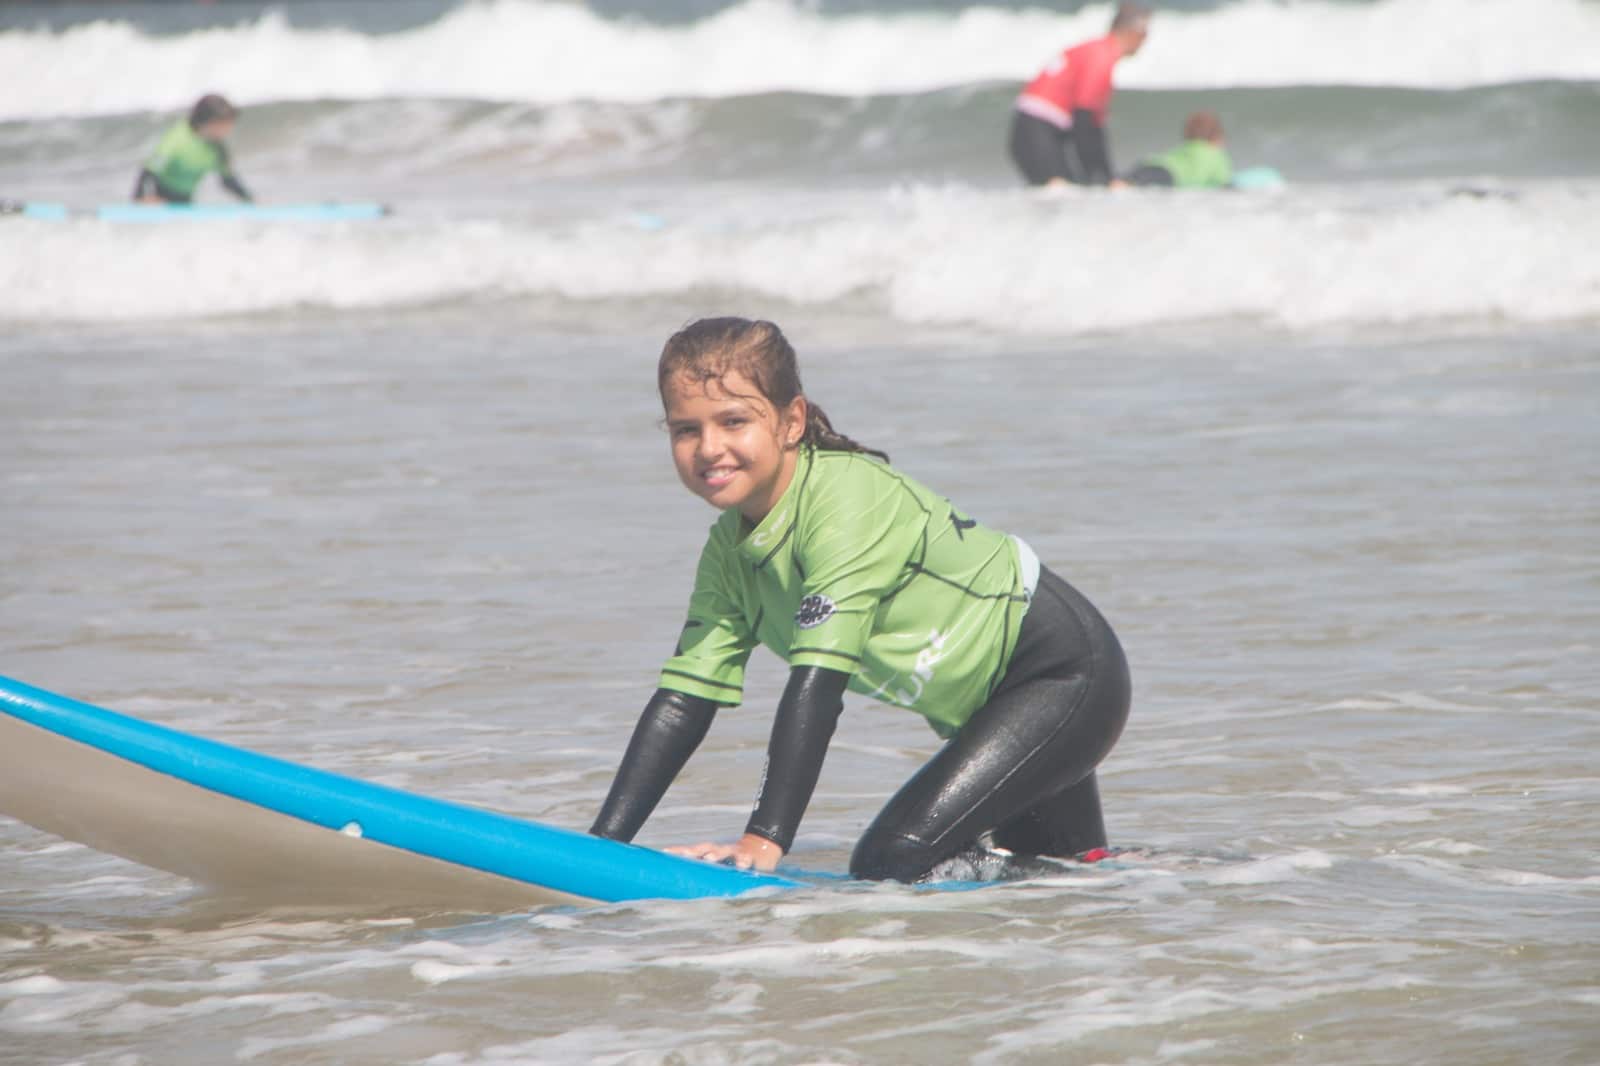 Surf Lessons in Gijon, Asturias at “Tablas Surf School”